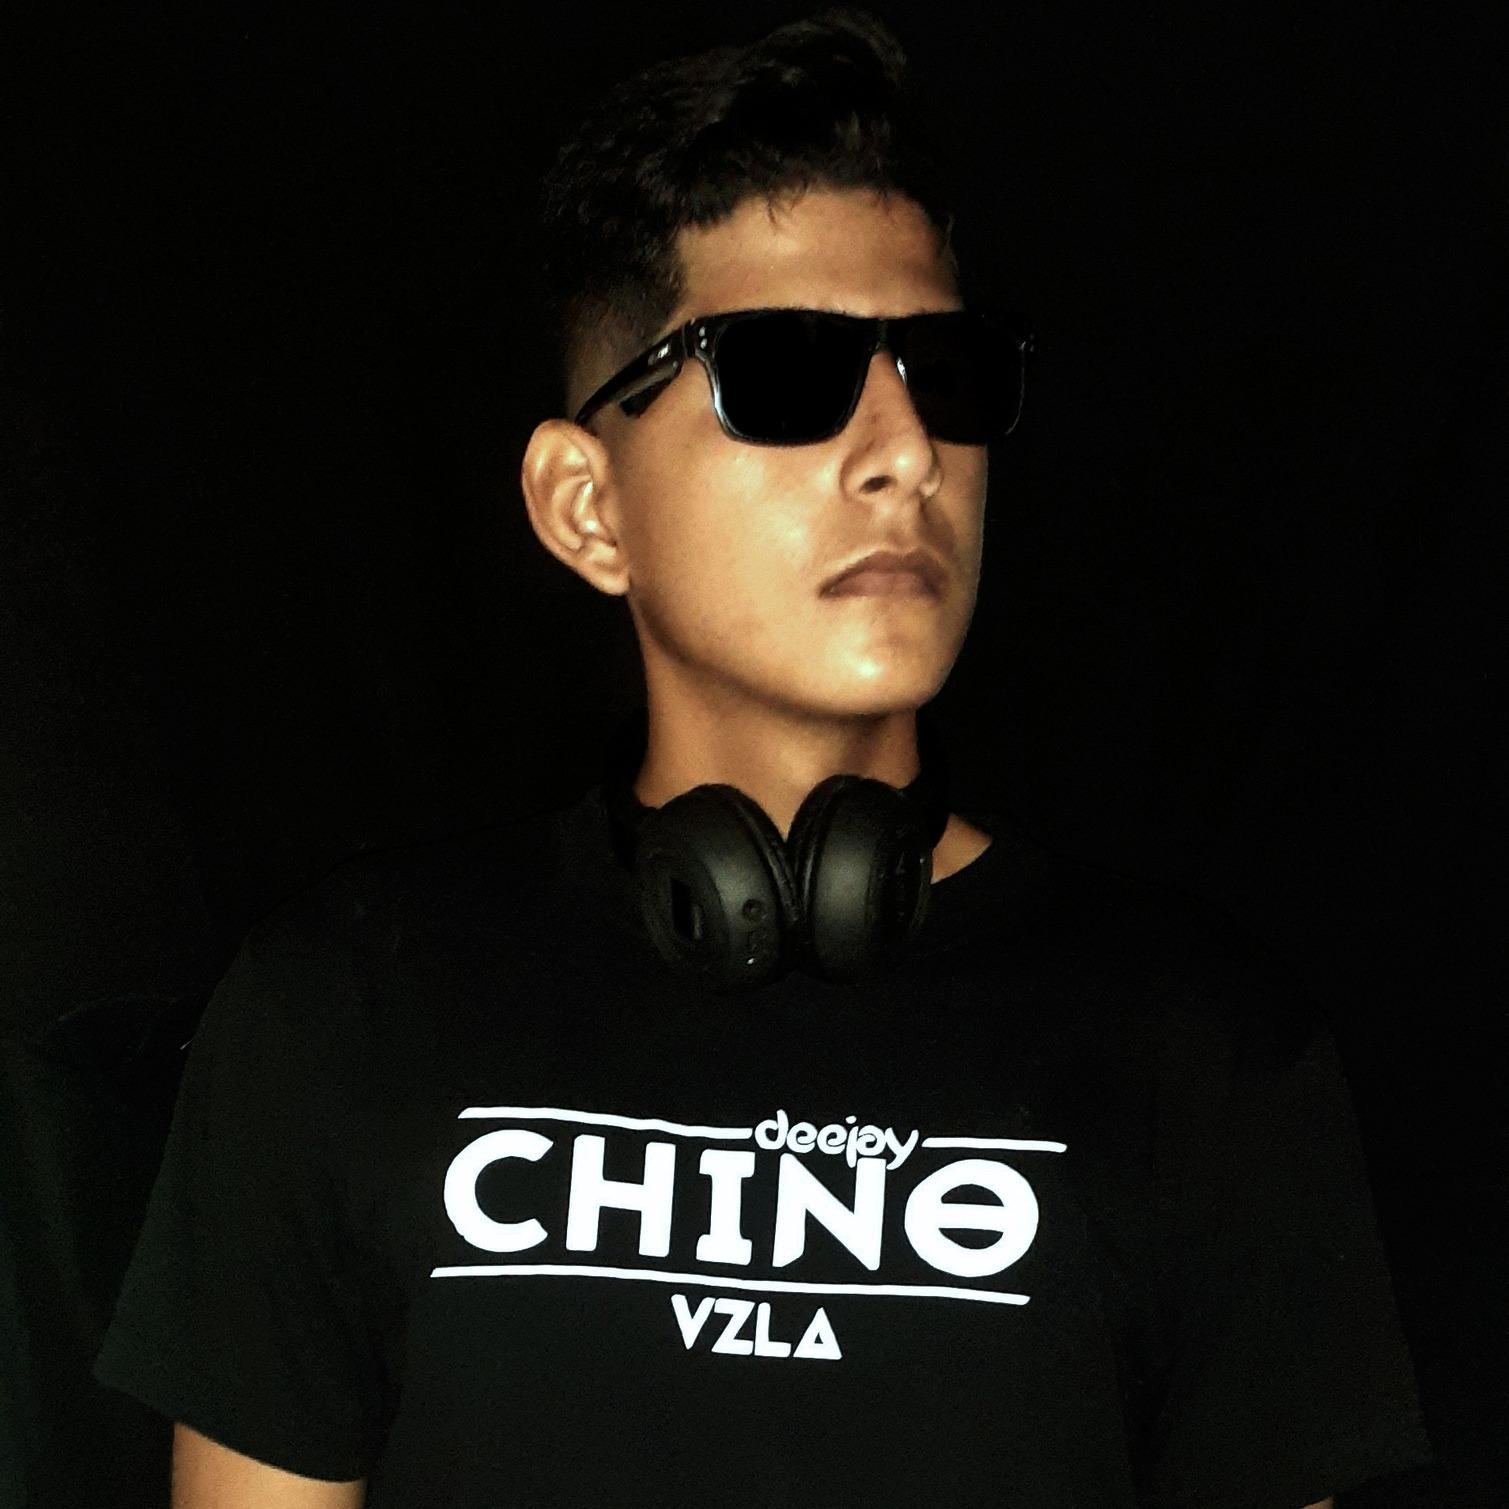 DJ Chino Vzla